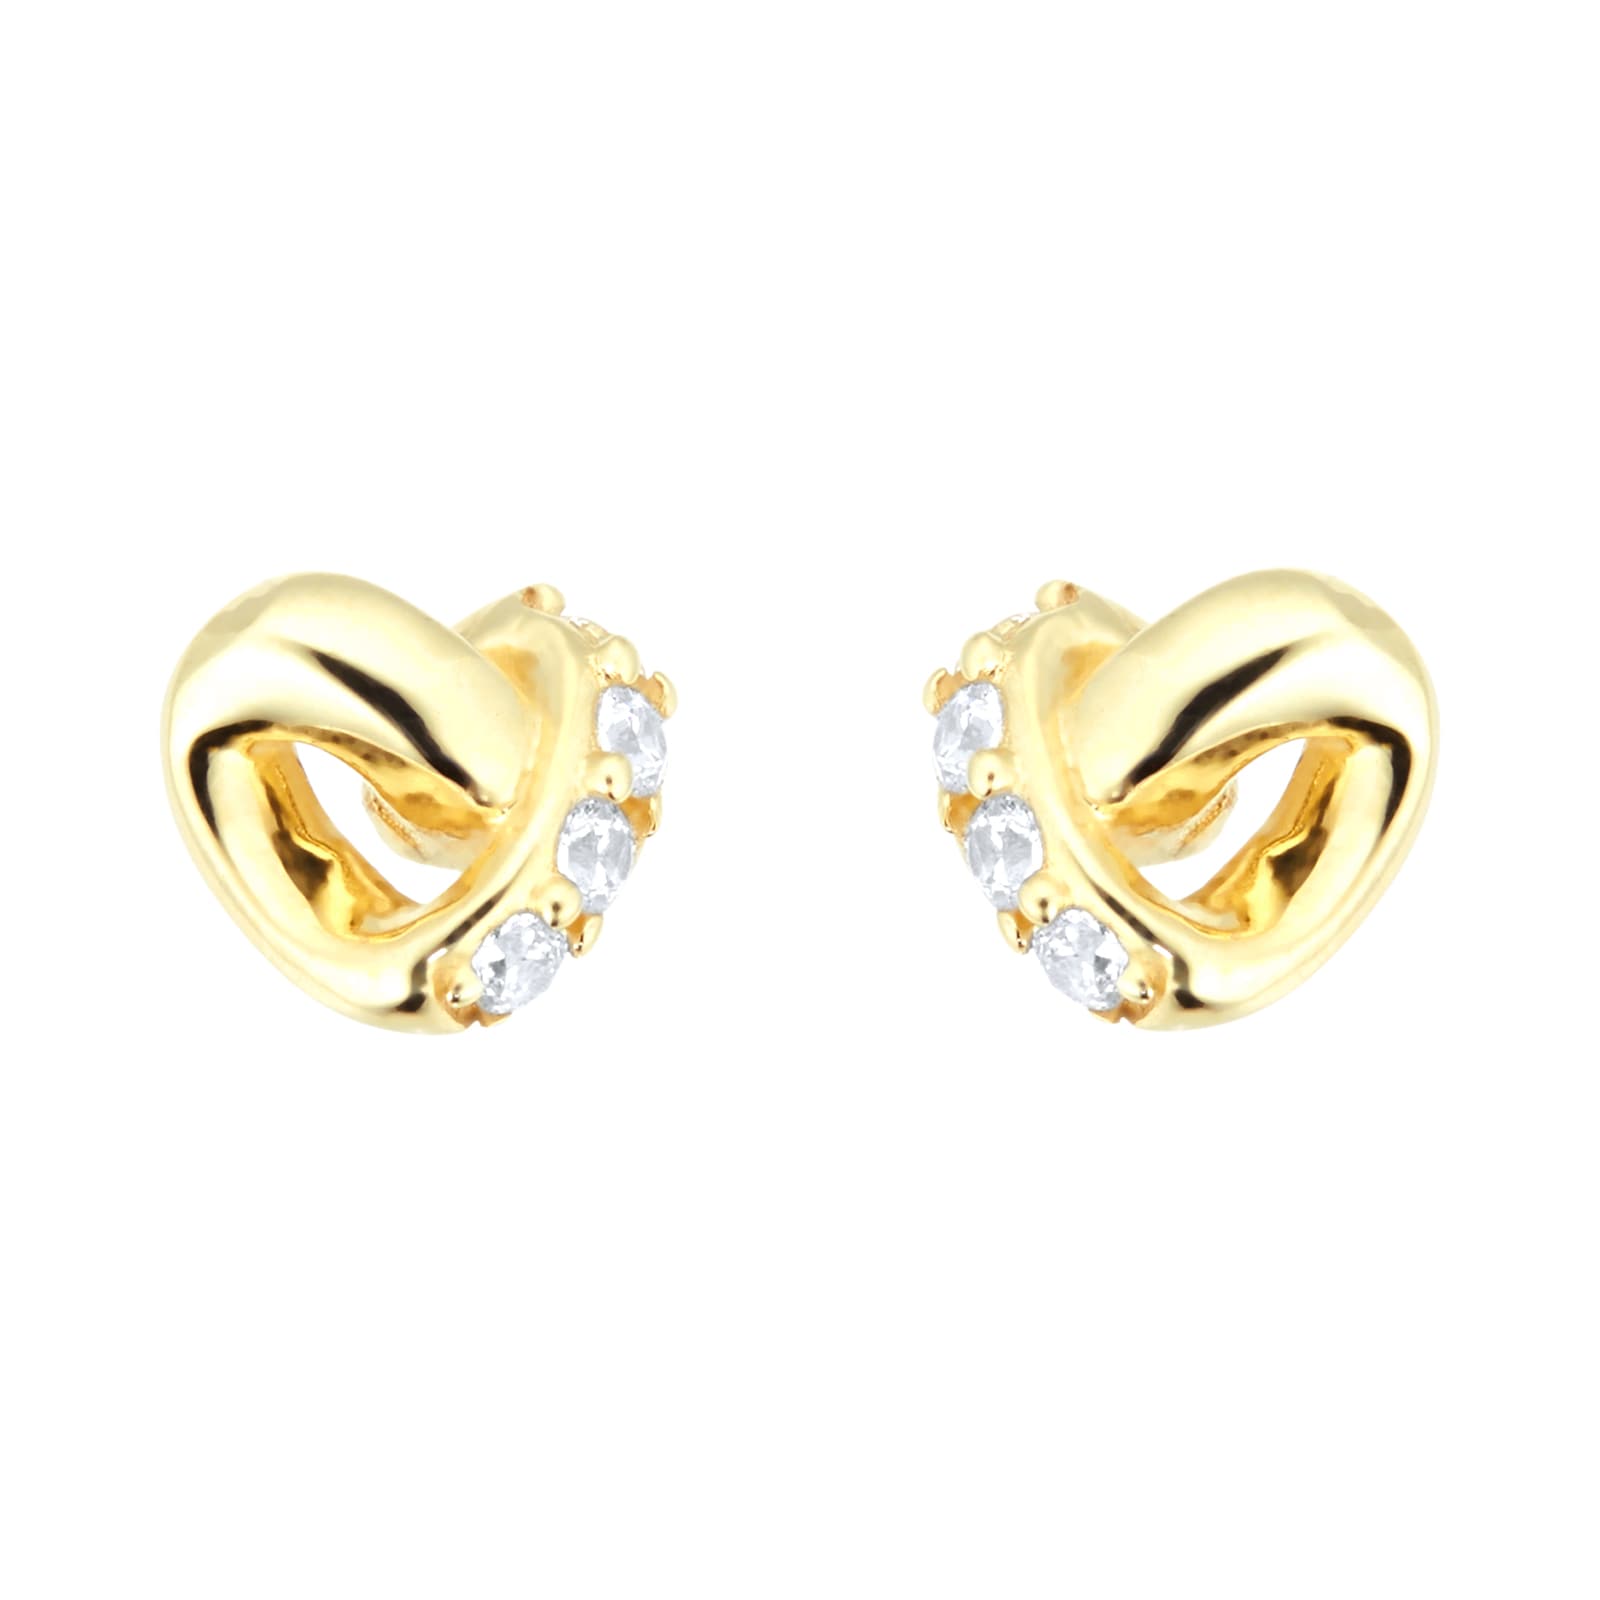 Goldsmiths 9ct Yellow Gold Knot Stud Earrings BG49568900WH | Goldsmiths